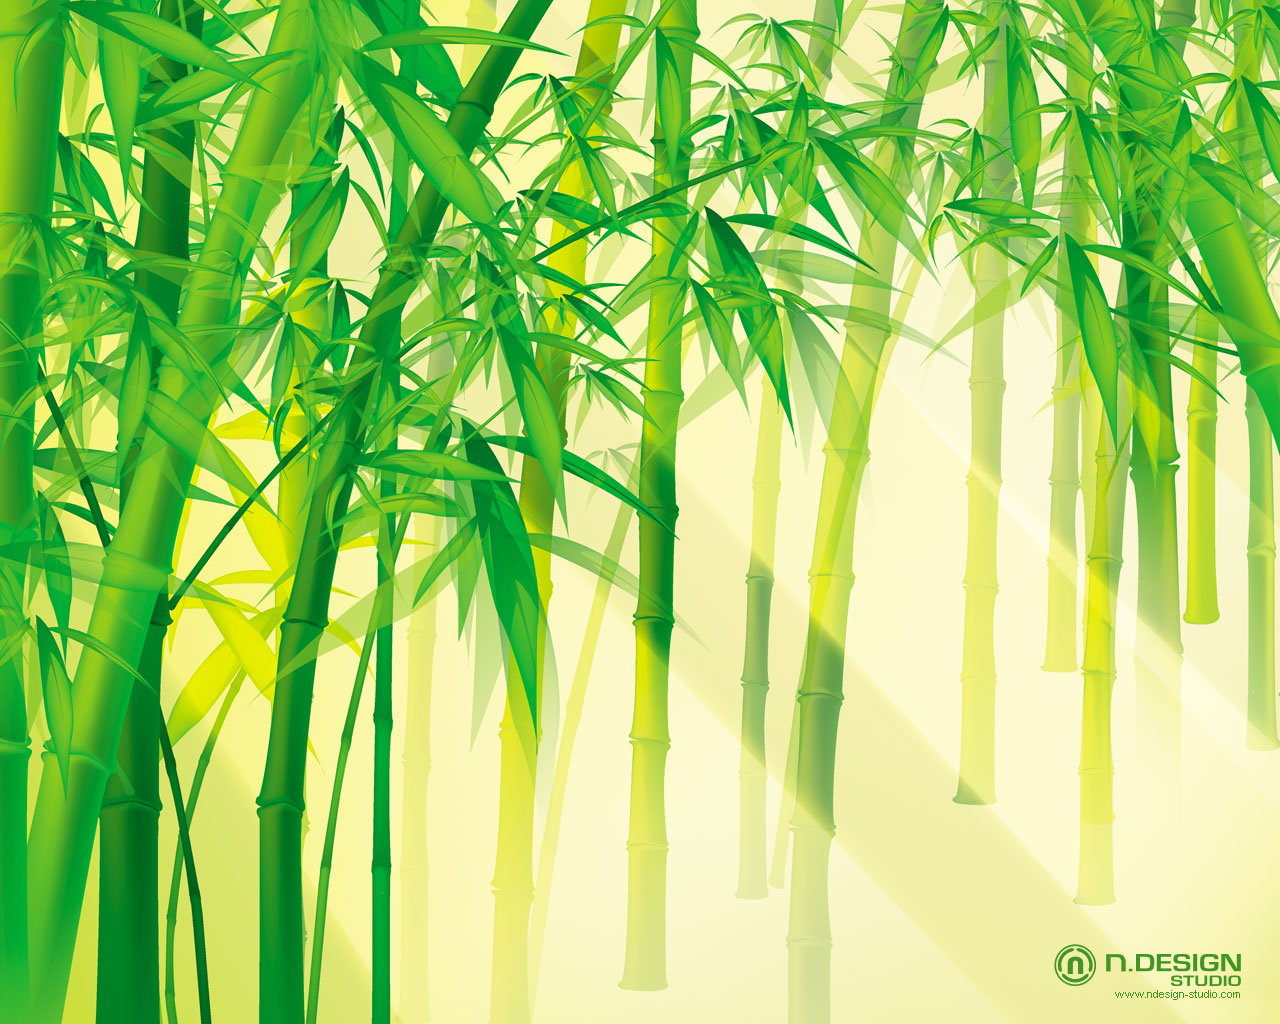 Bamboo scene - abstract wallpaper